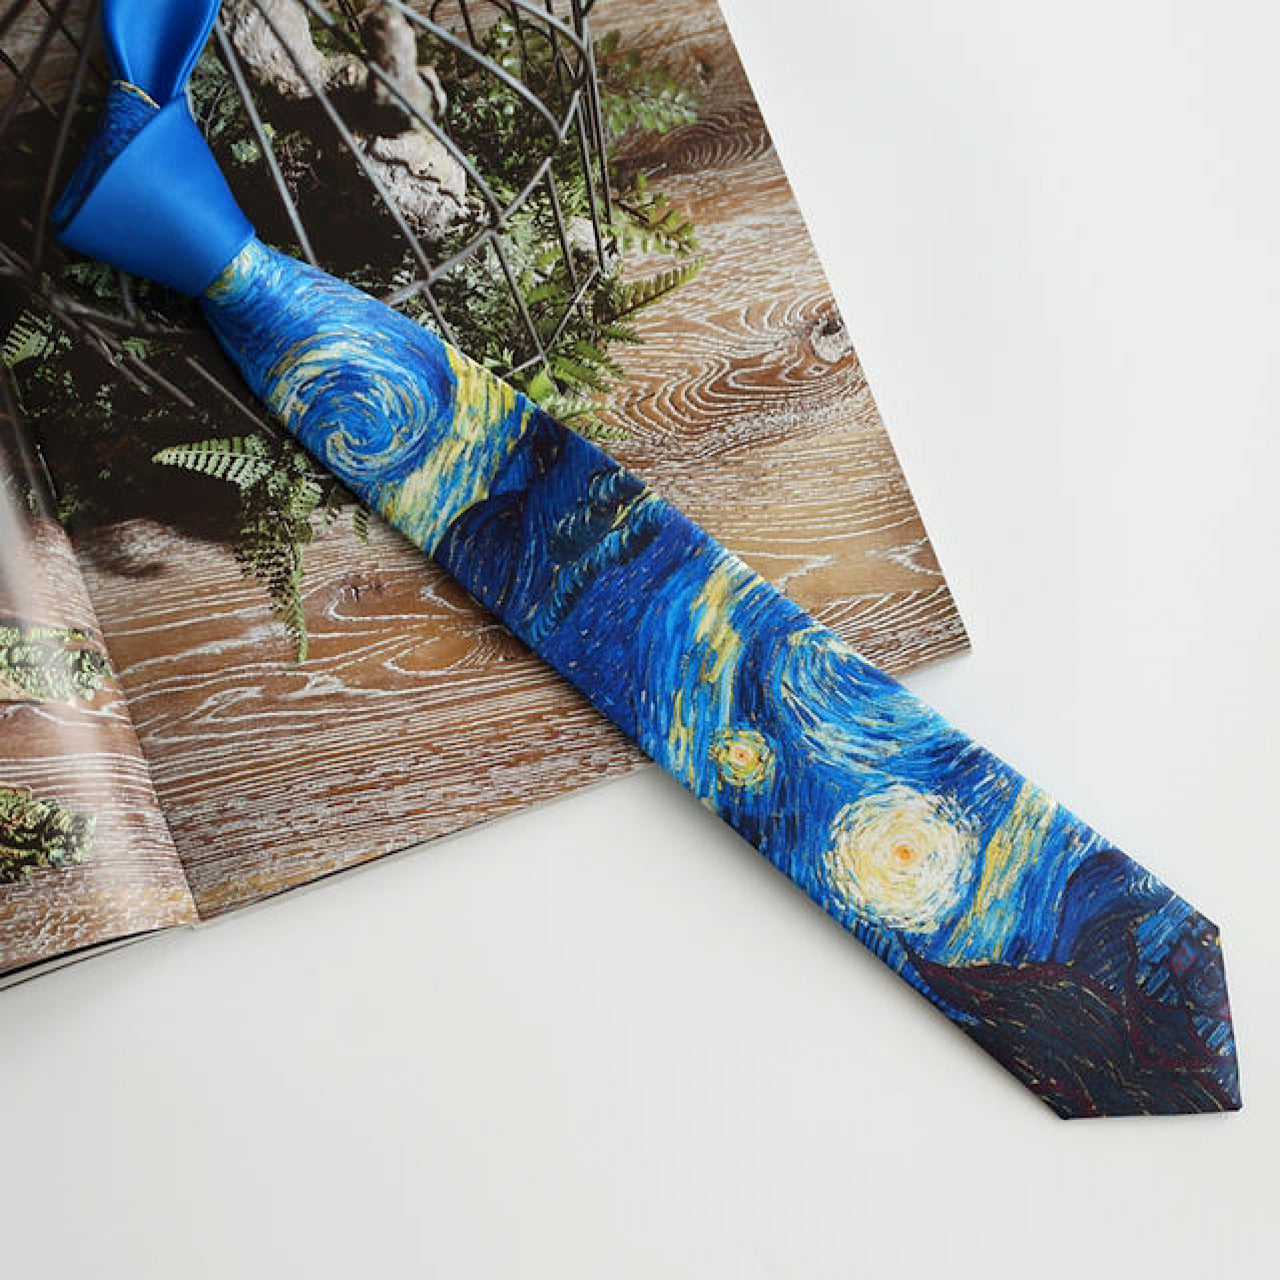 Painting blue design necktie  HL1575